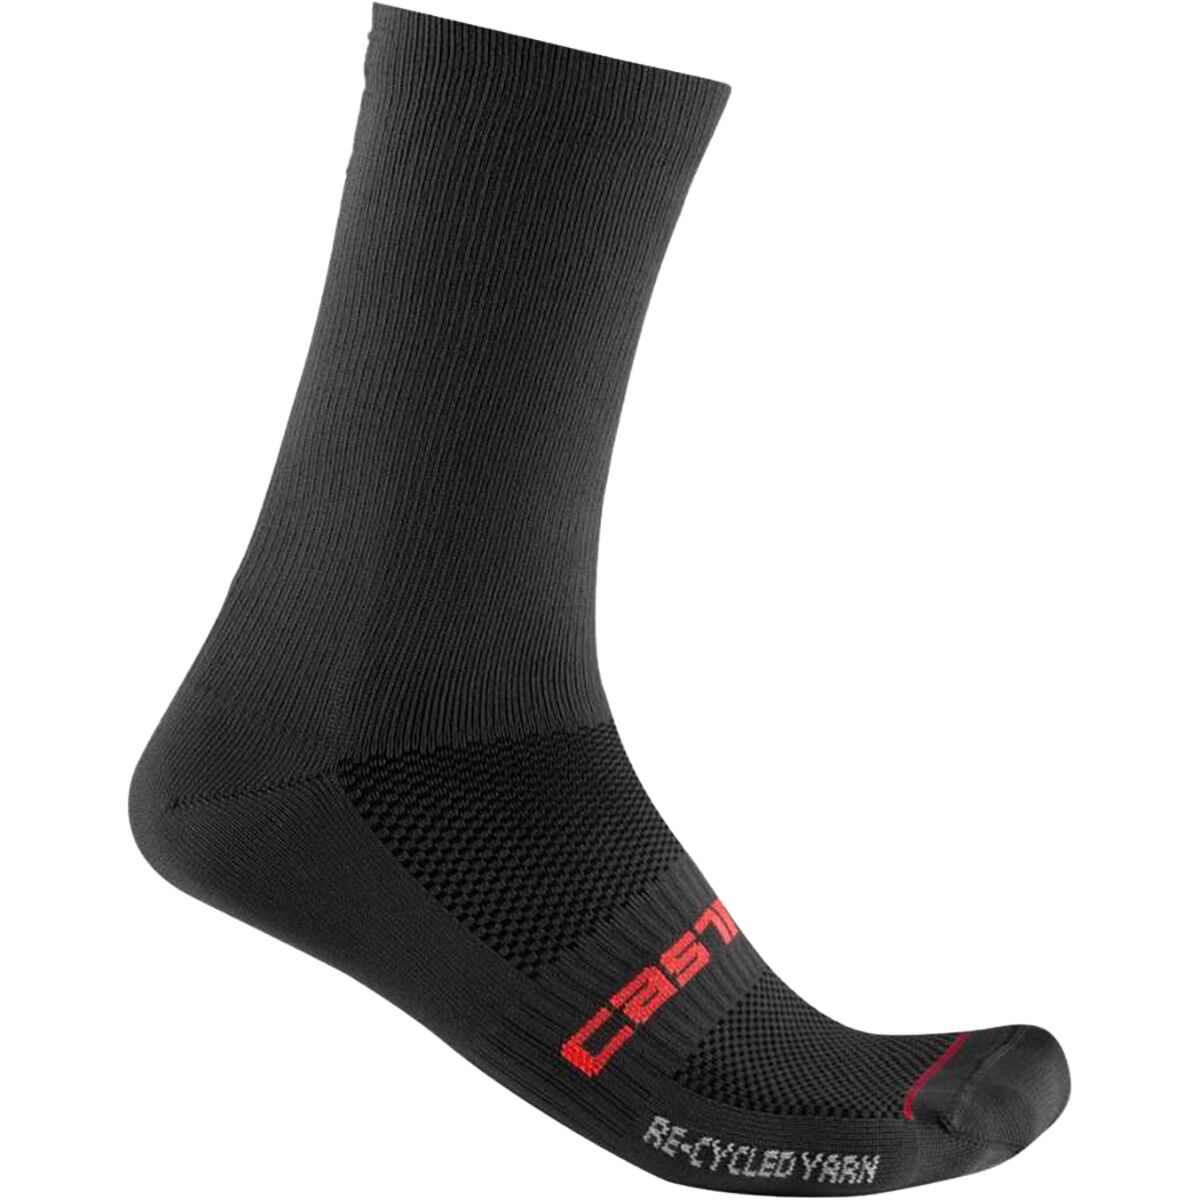 Castelli Re-Cycle Thermal 18 Sock - Men's